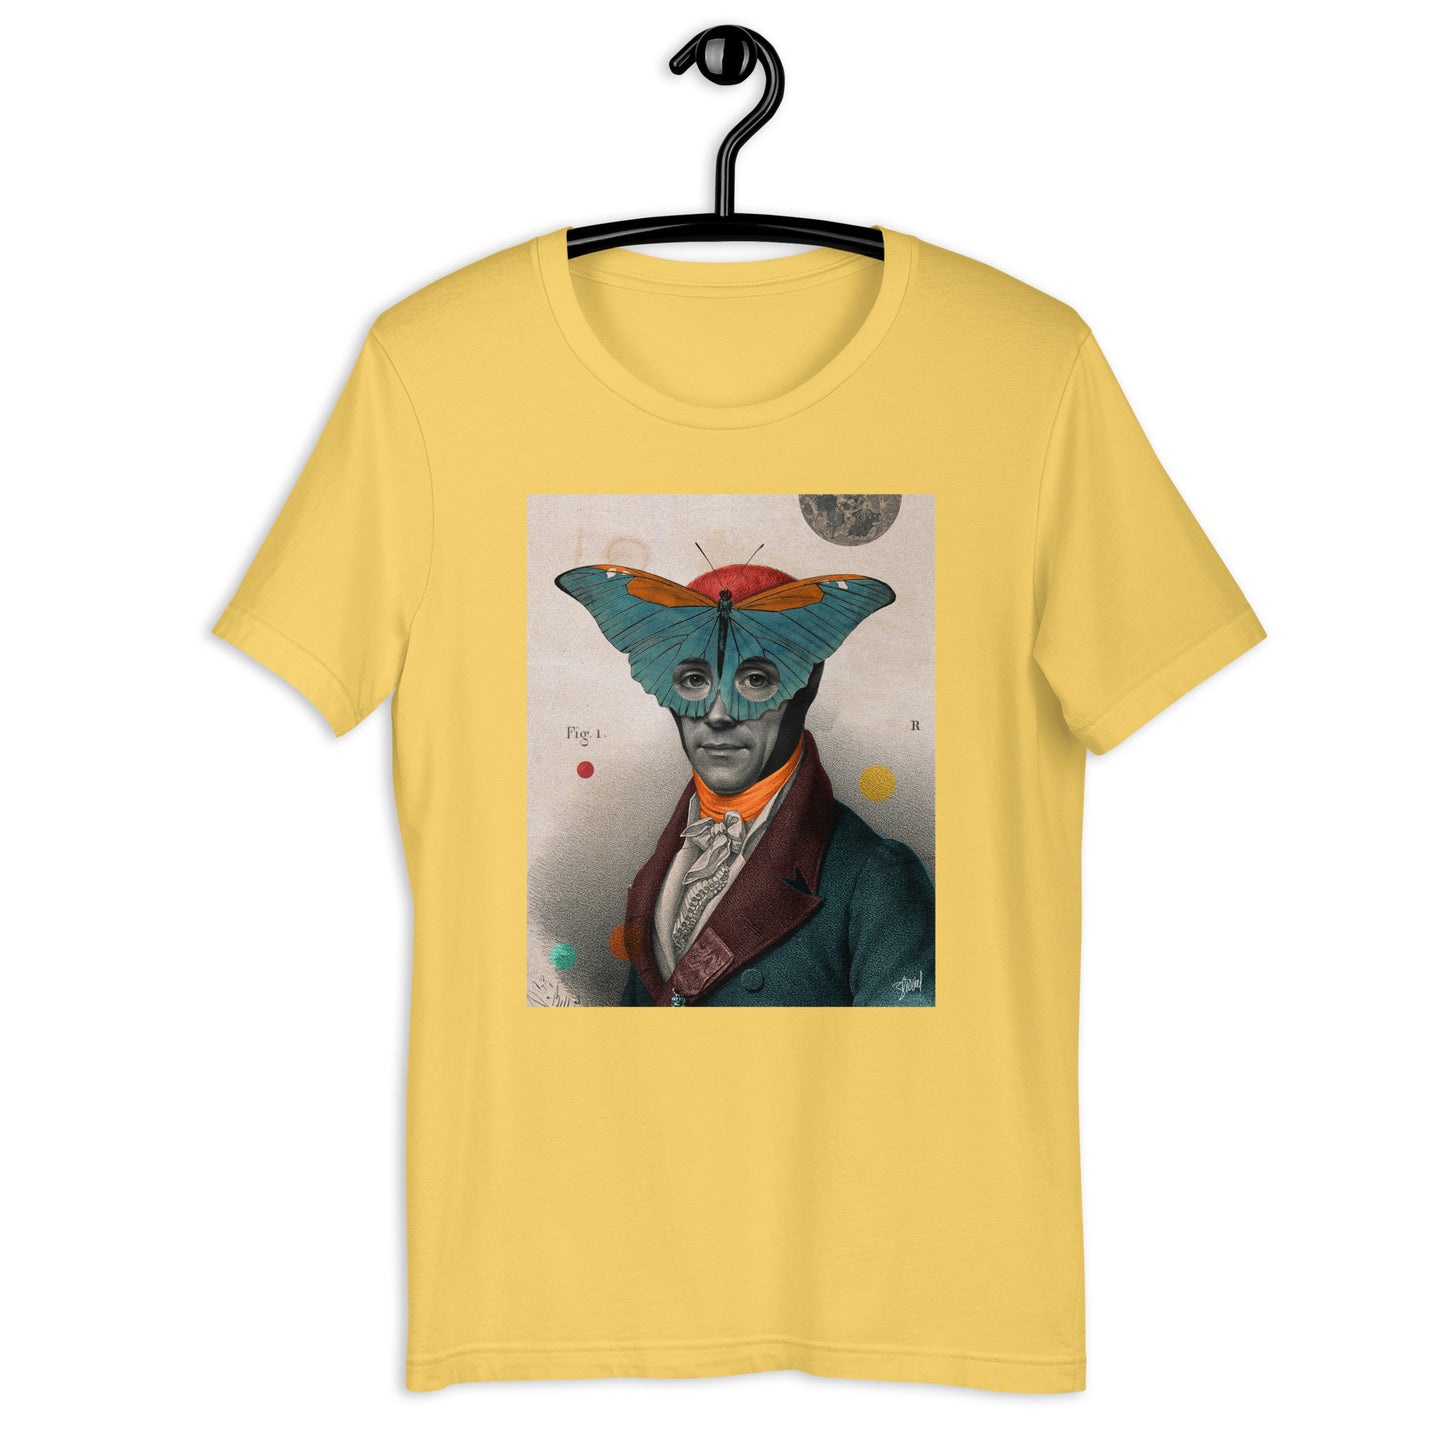 Butterfly man - Medieval Superhero #1. (Unisex t-shirt)